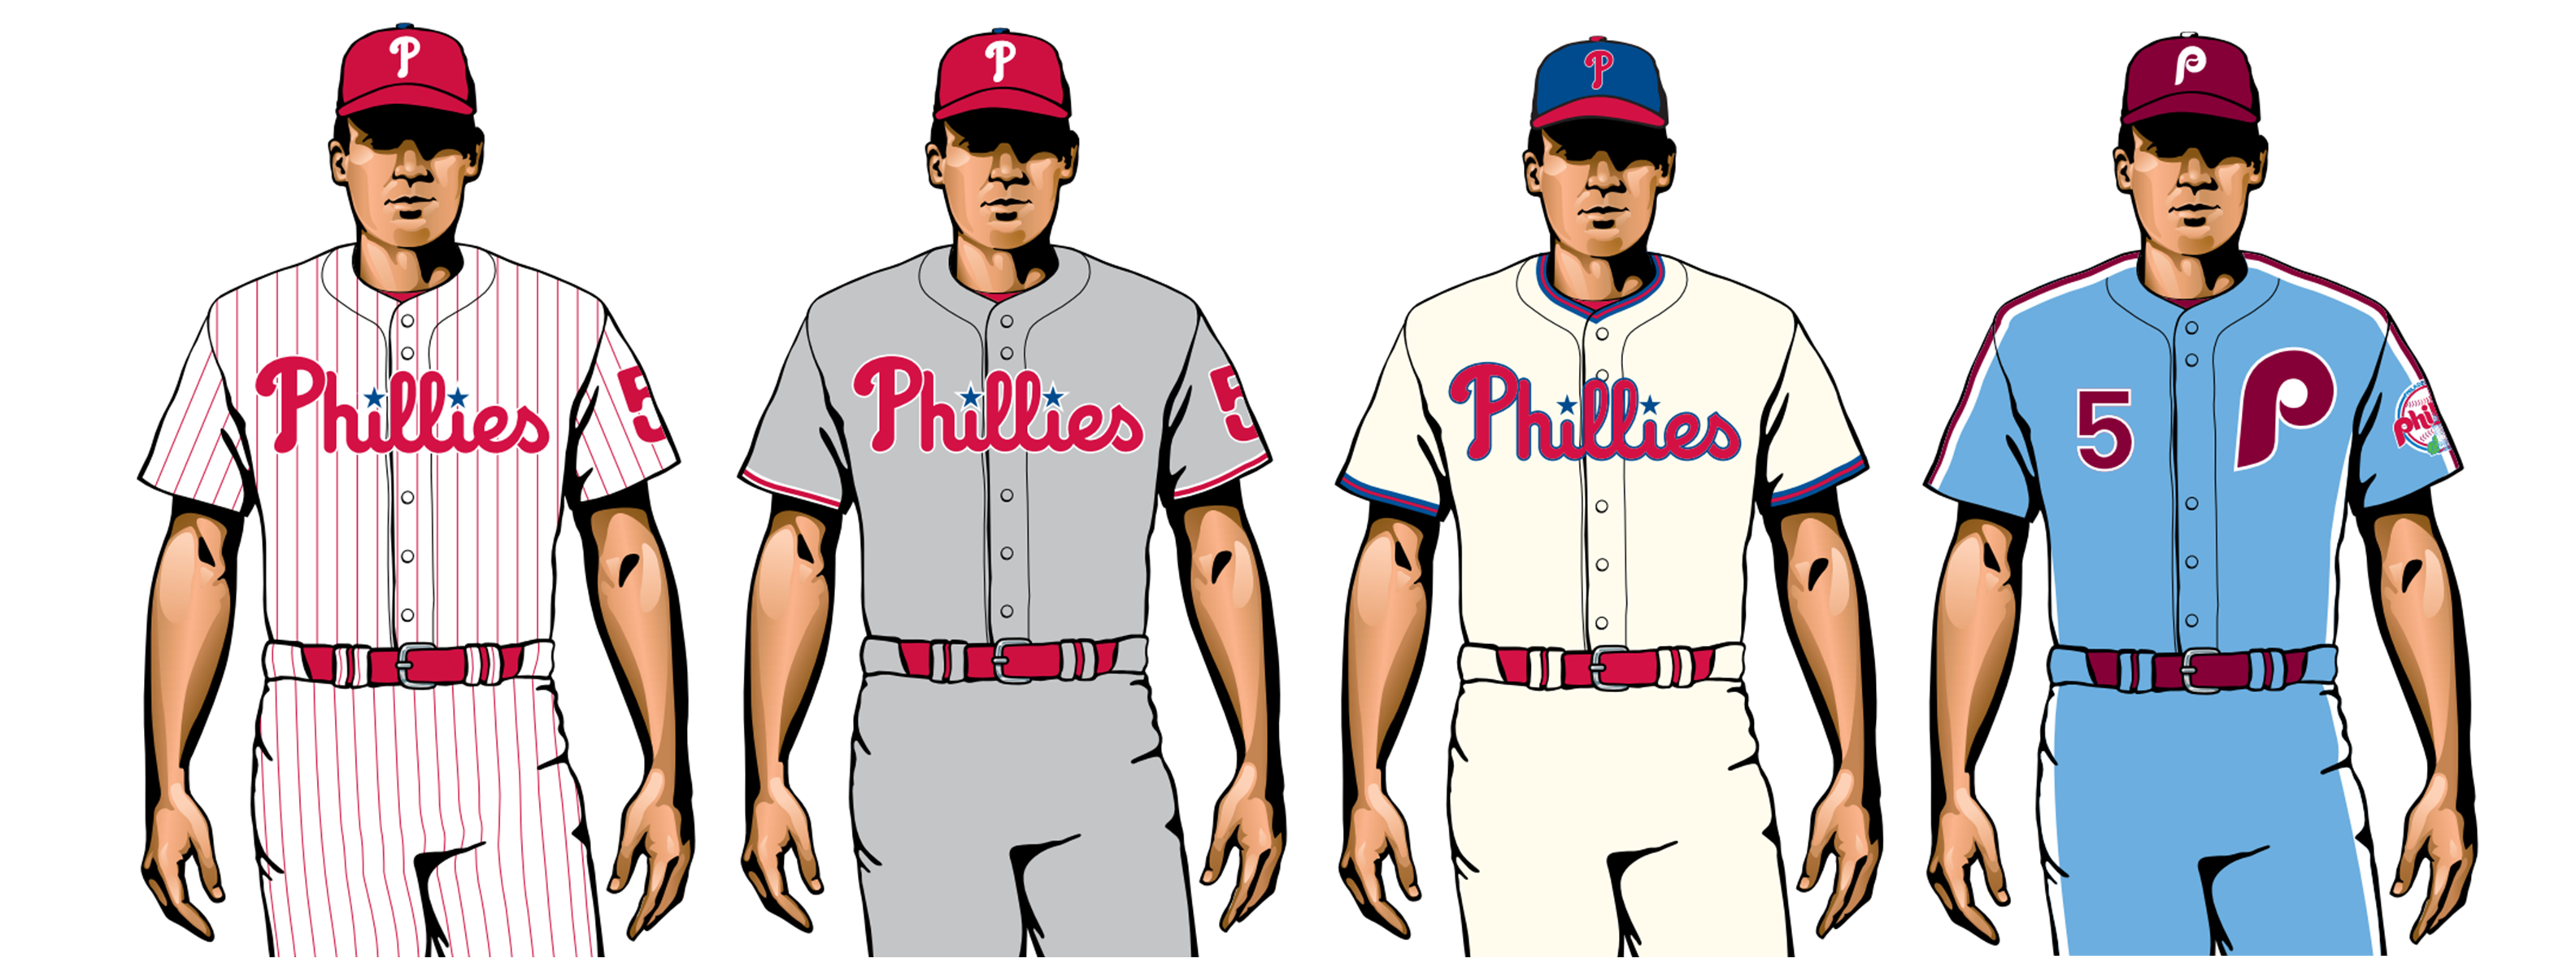 philadelphia phillies 2020 uniforms